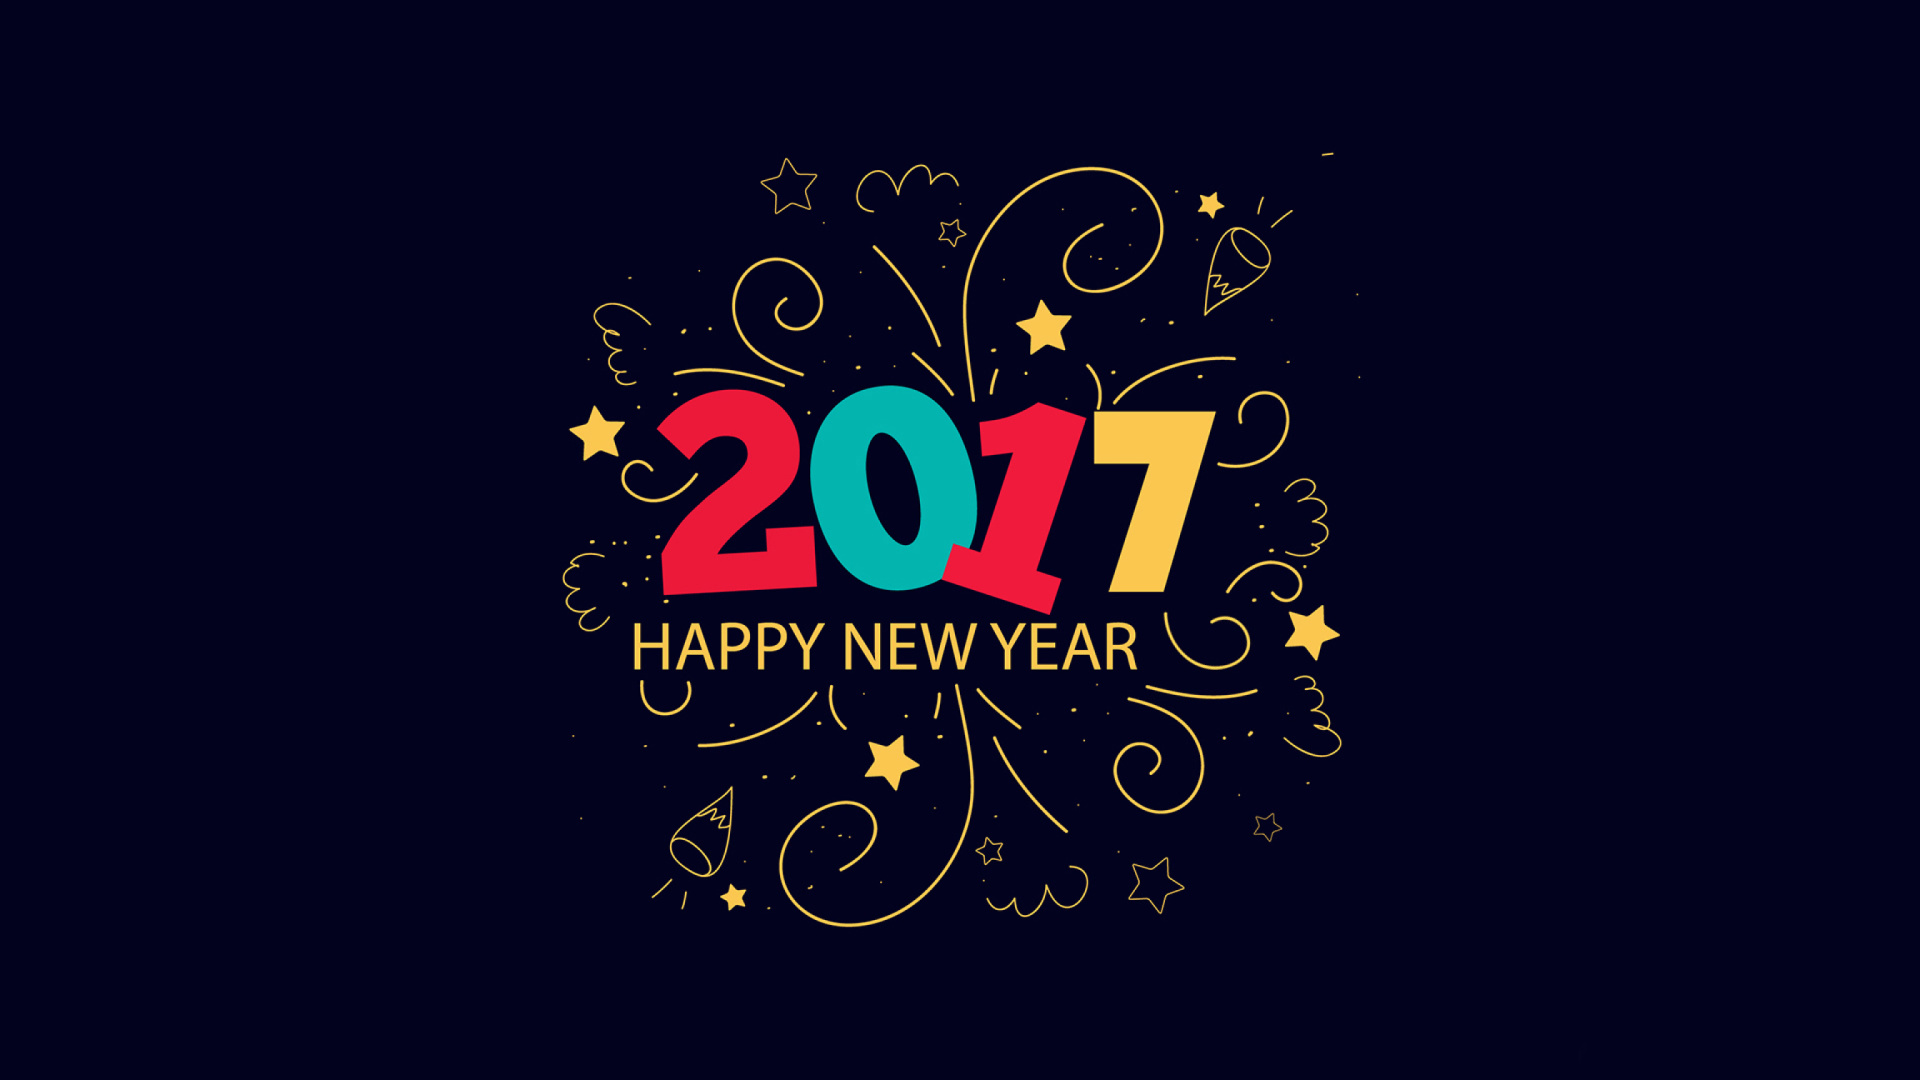 New Year 2017 wallpaper 1920x1080